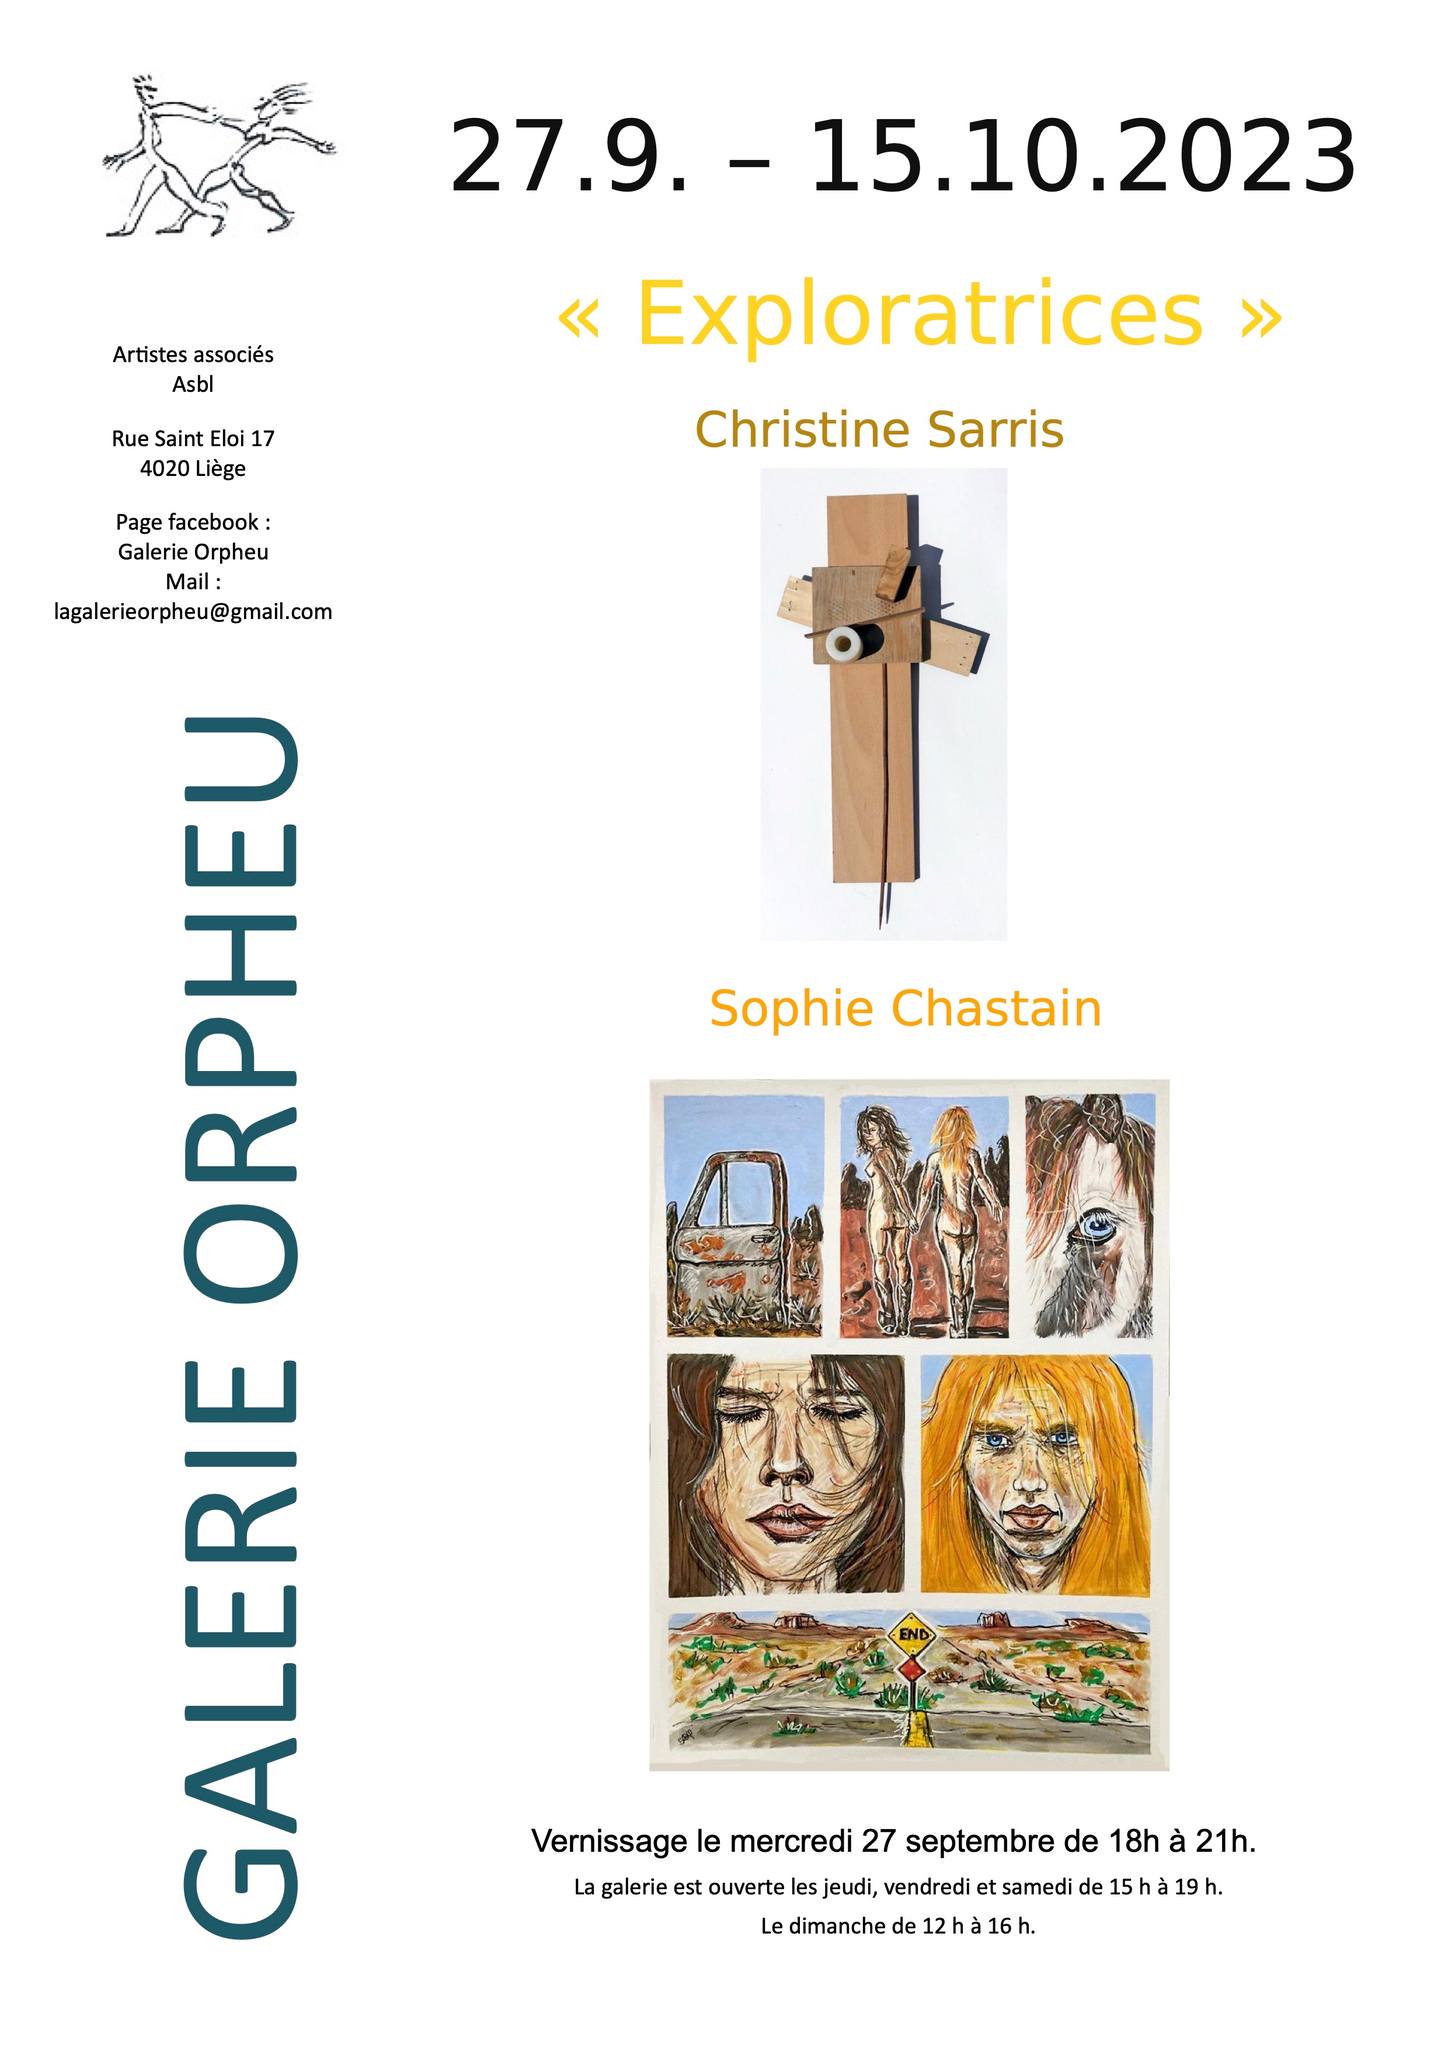 La Galerie Orpheu expose Christine Sarris & Sophie Chastain